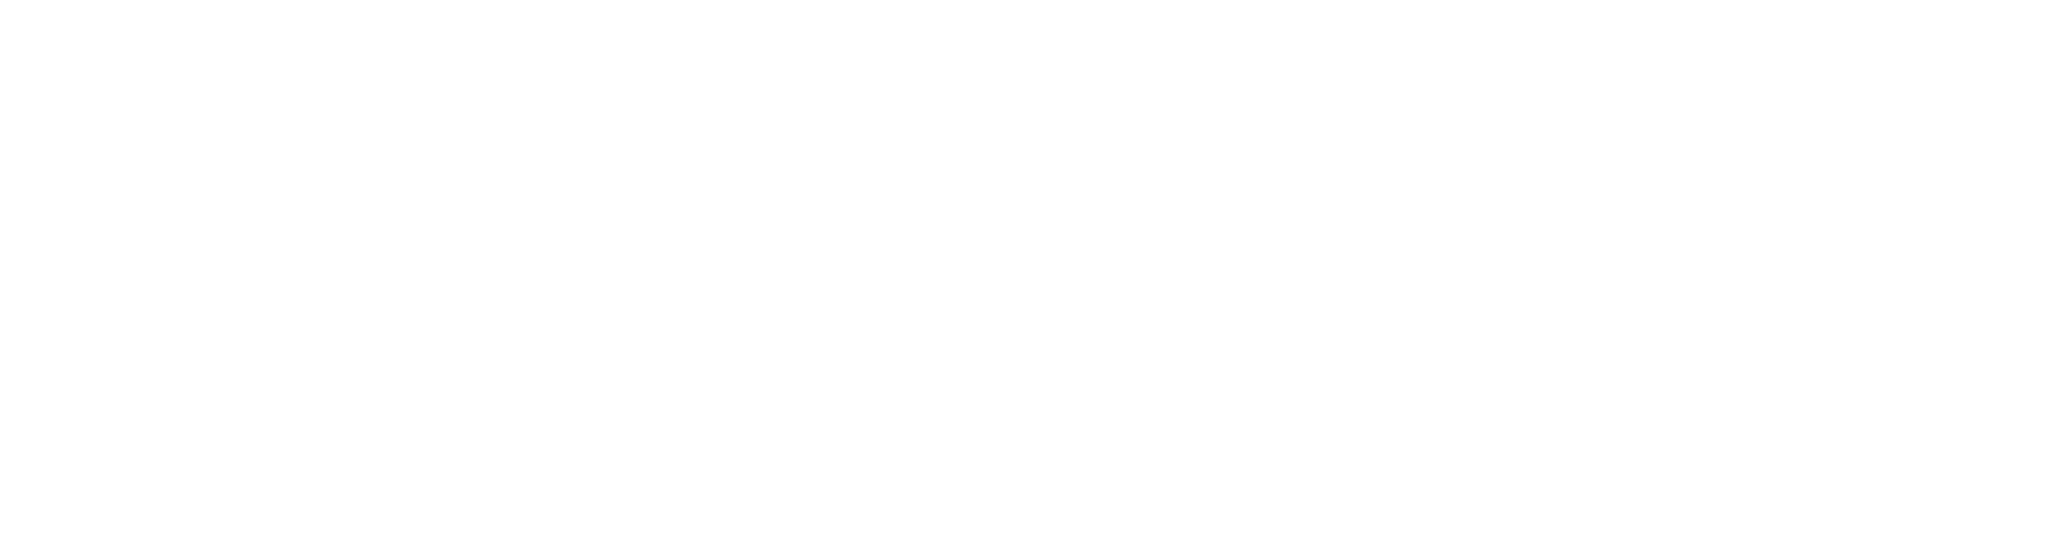 DIHK Onlineshop